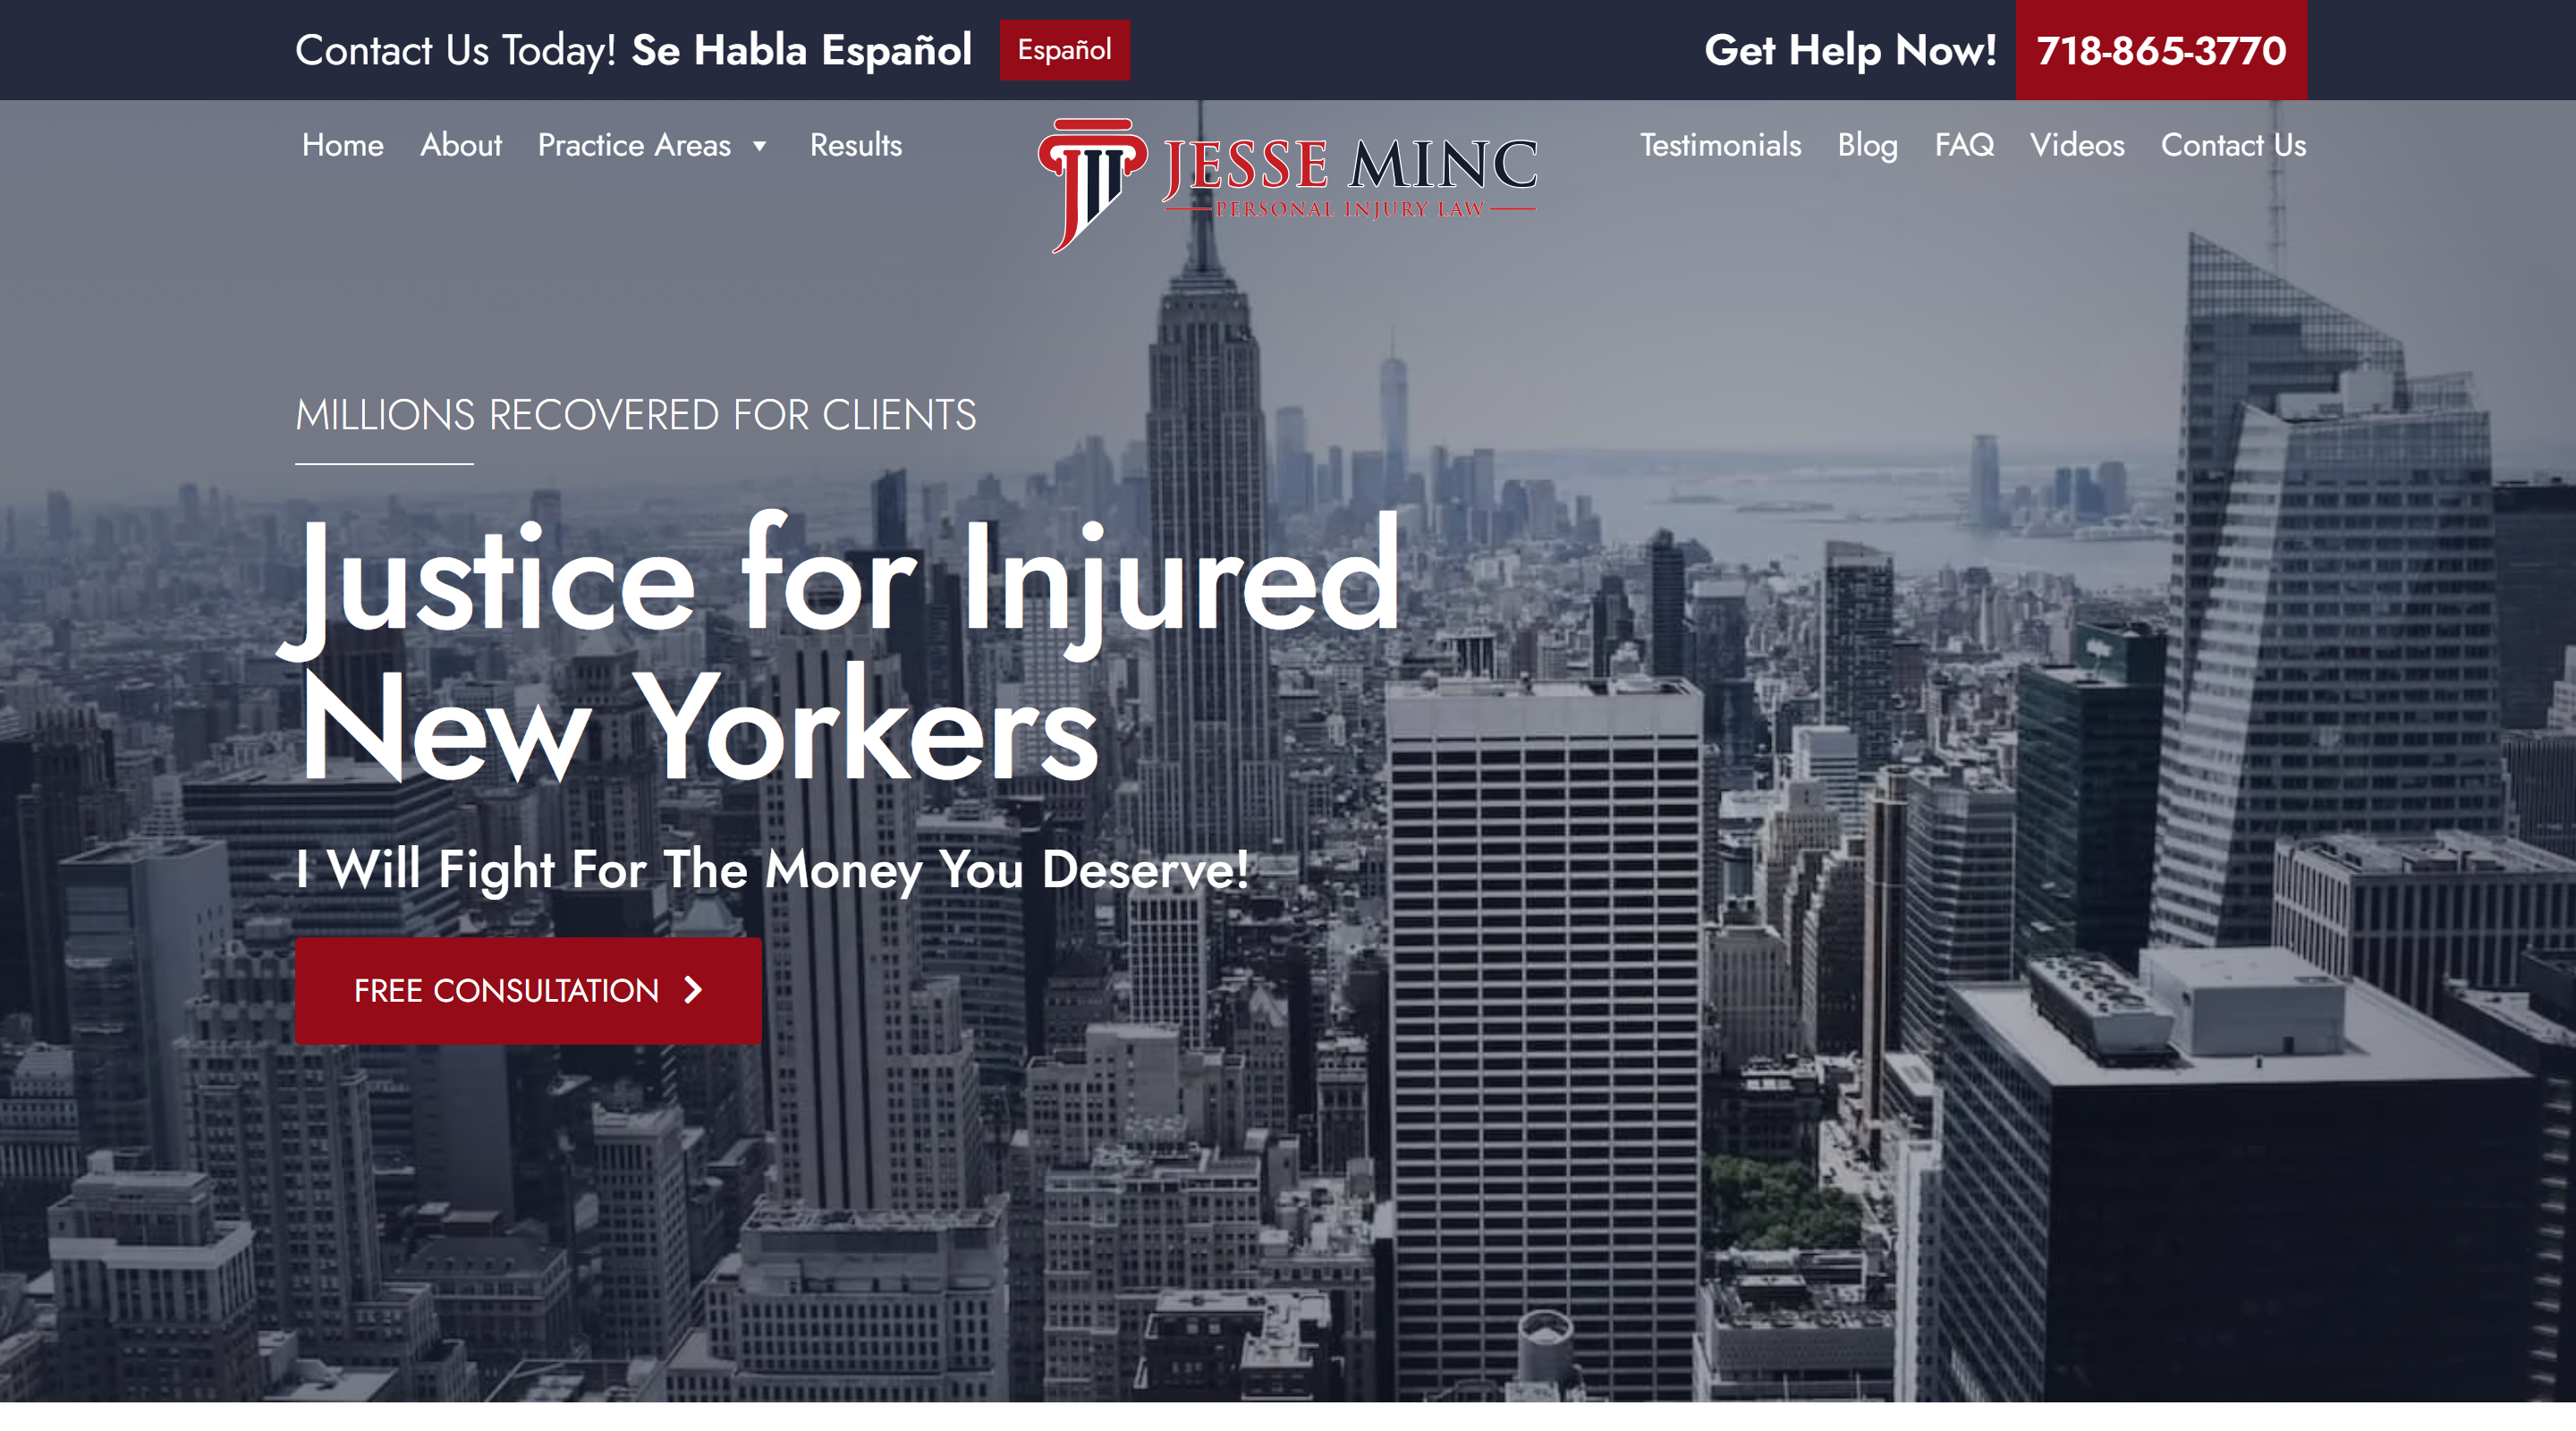 Jesse Minc Personal Injury Law firm websites